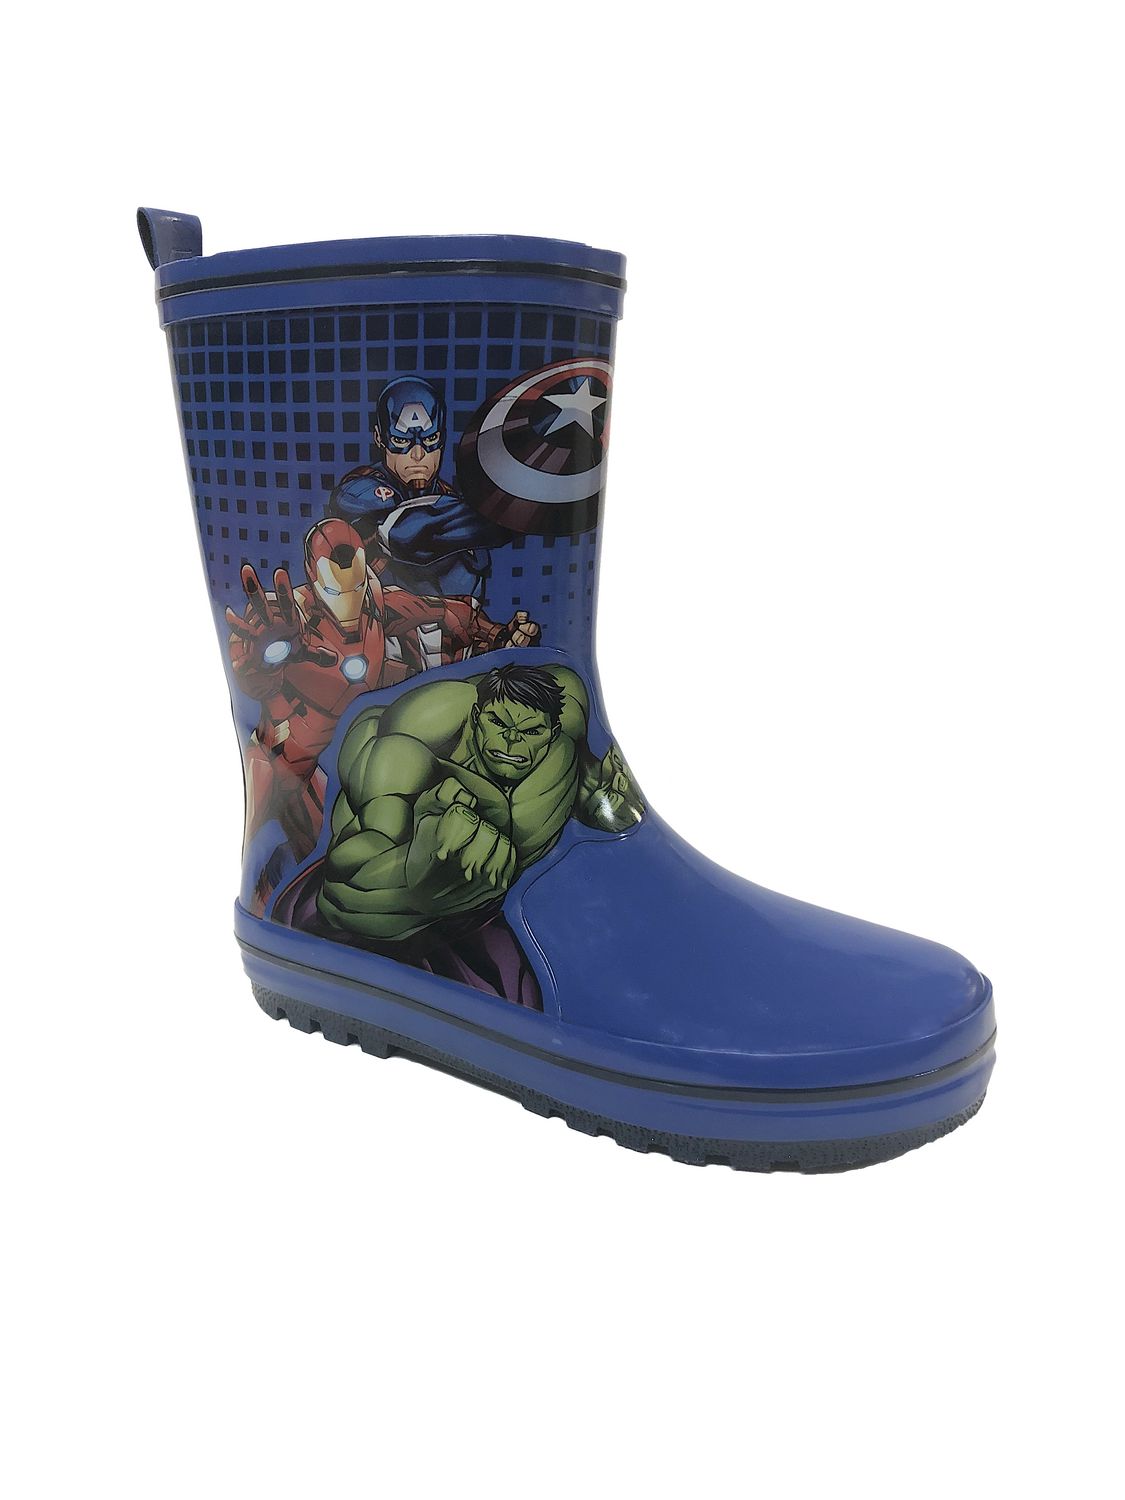 Marvel Avengers Boy's Rain boot - Walmart.ca